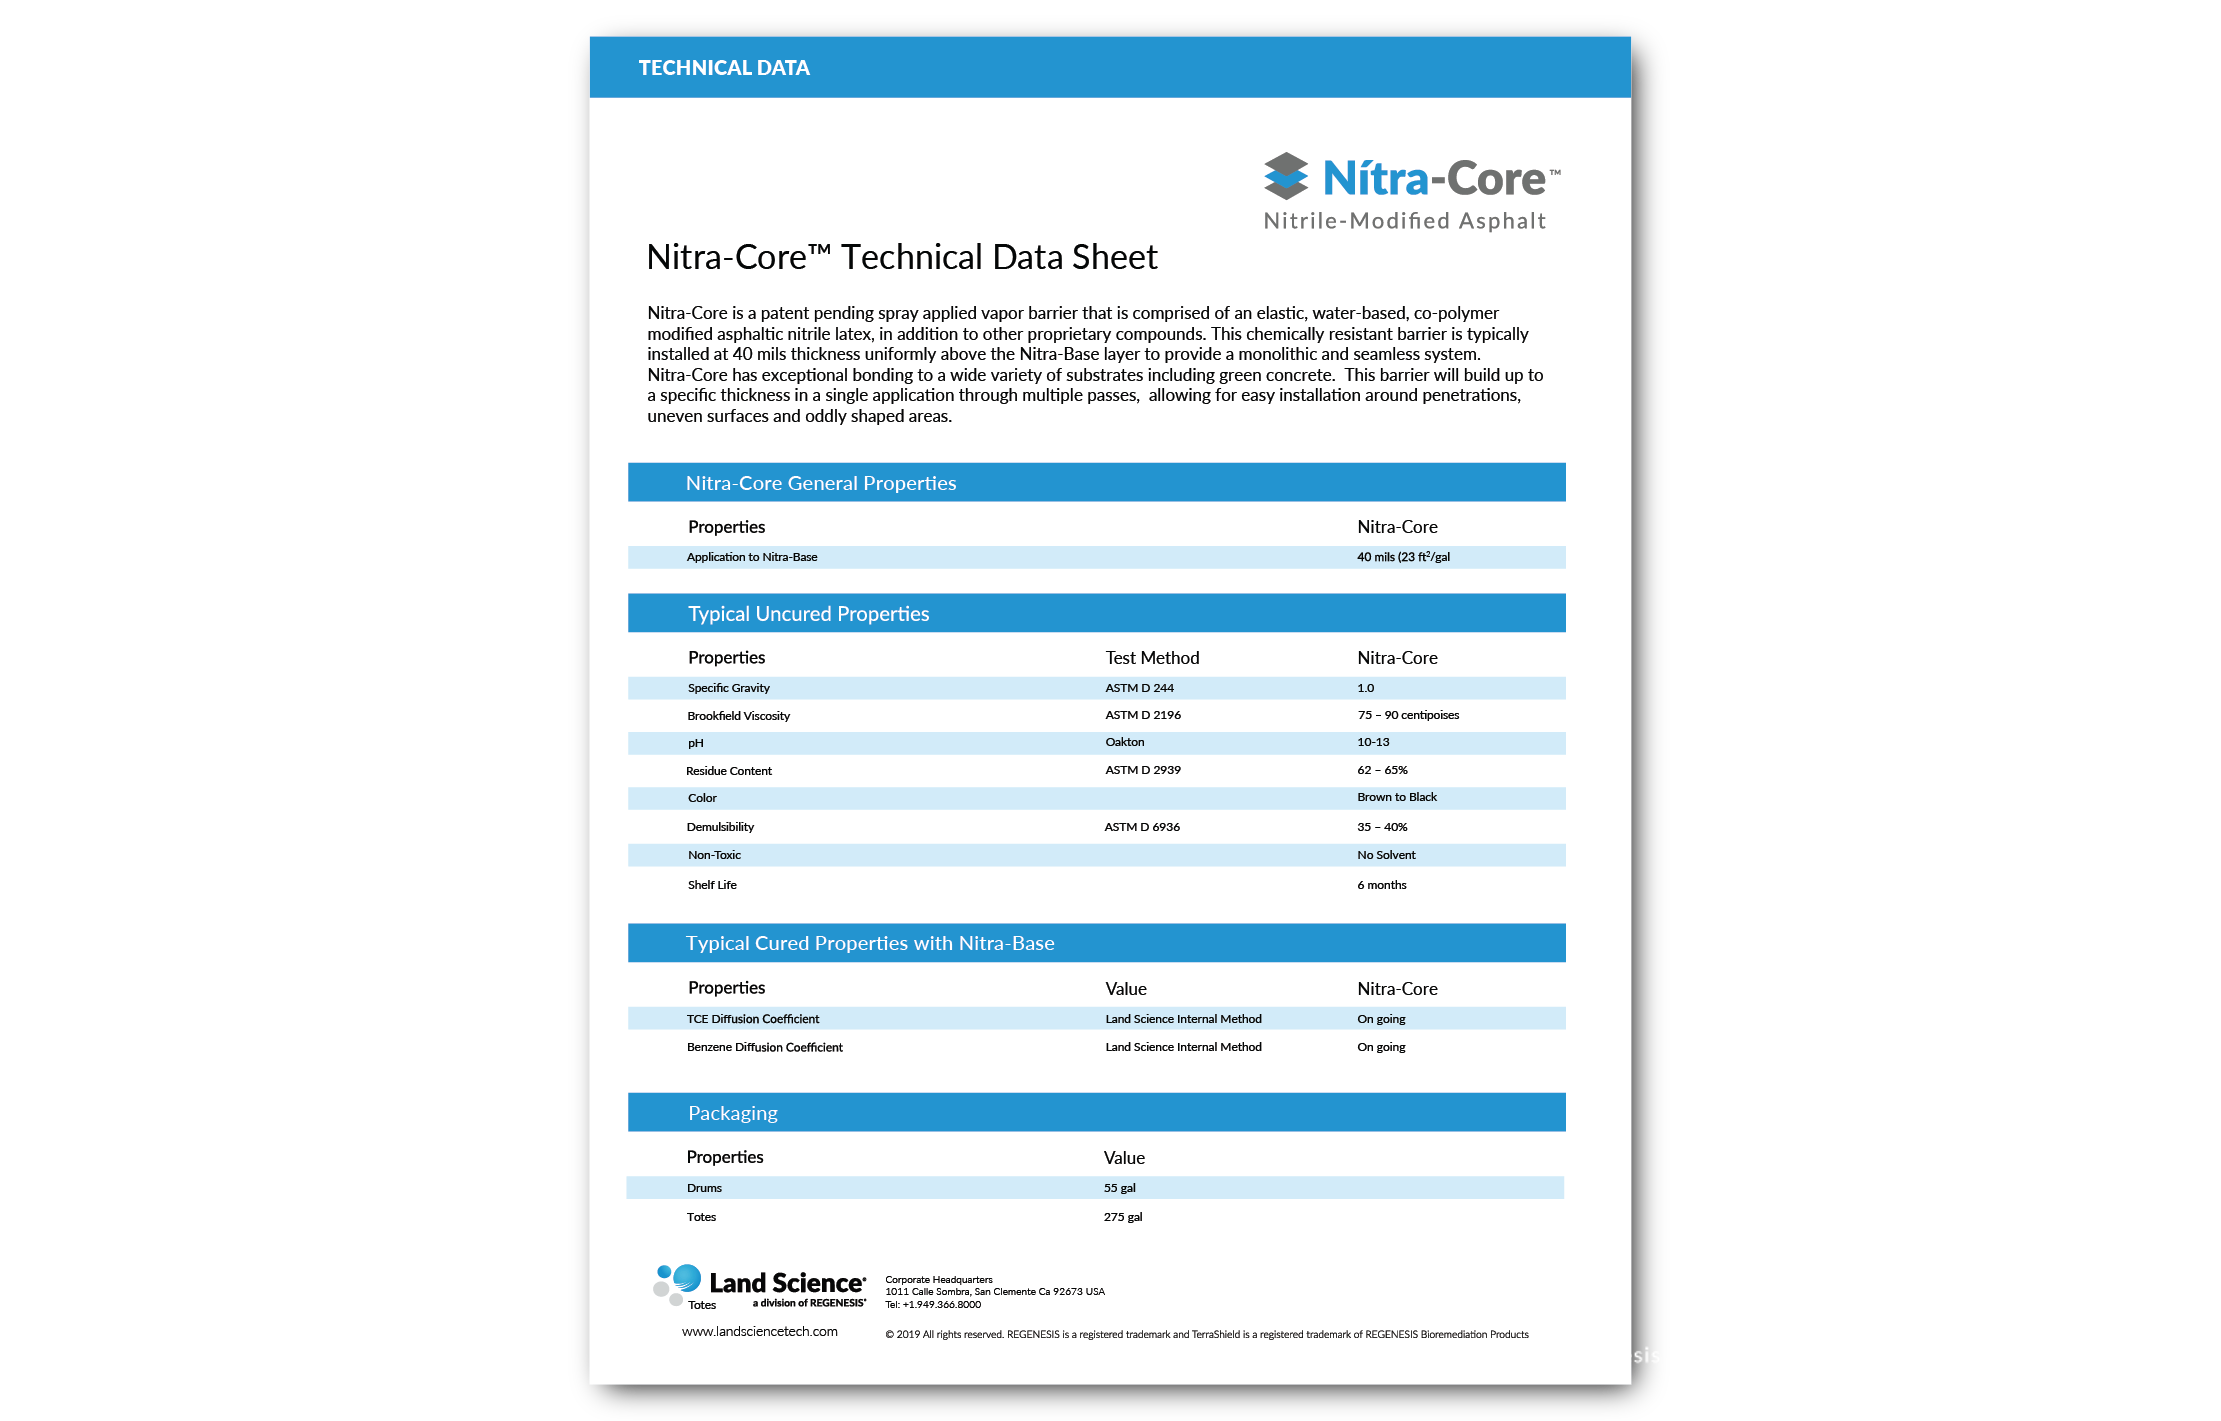 Nitra-Core Technical Data Sheet